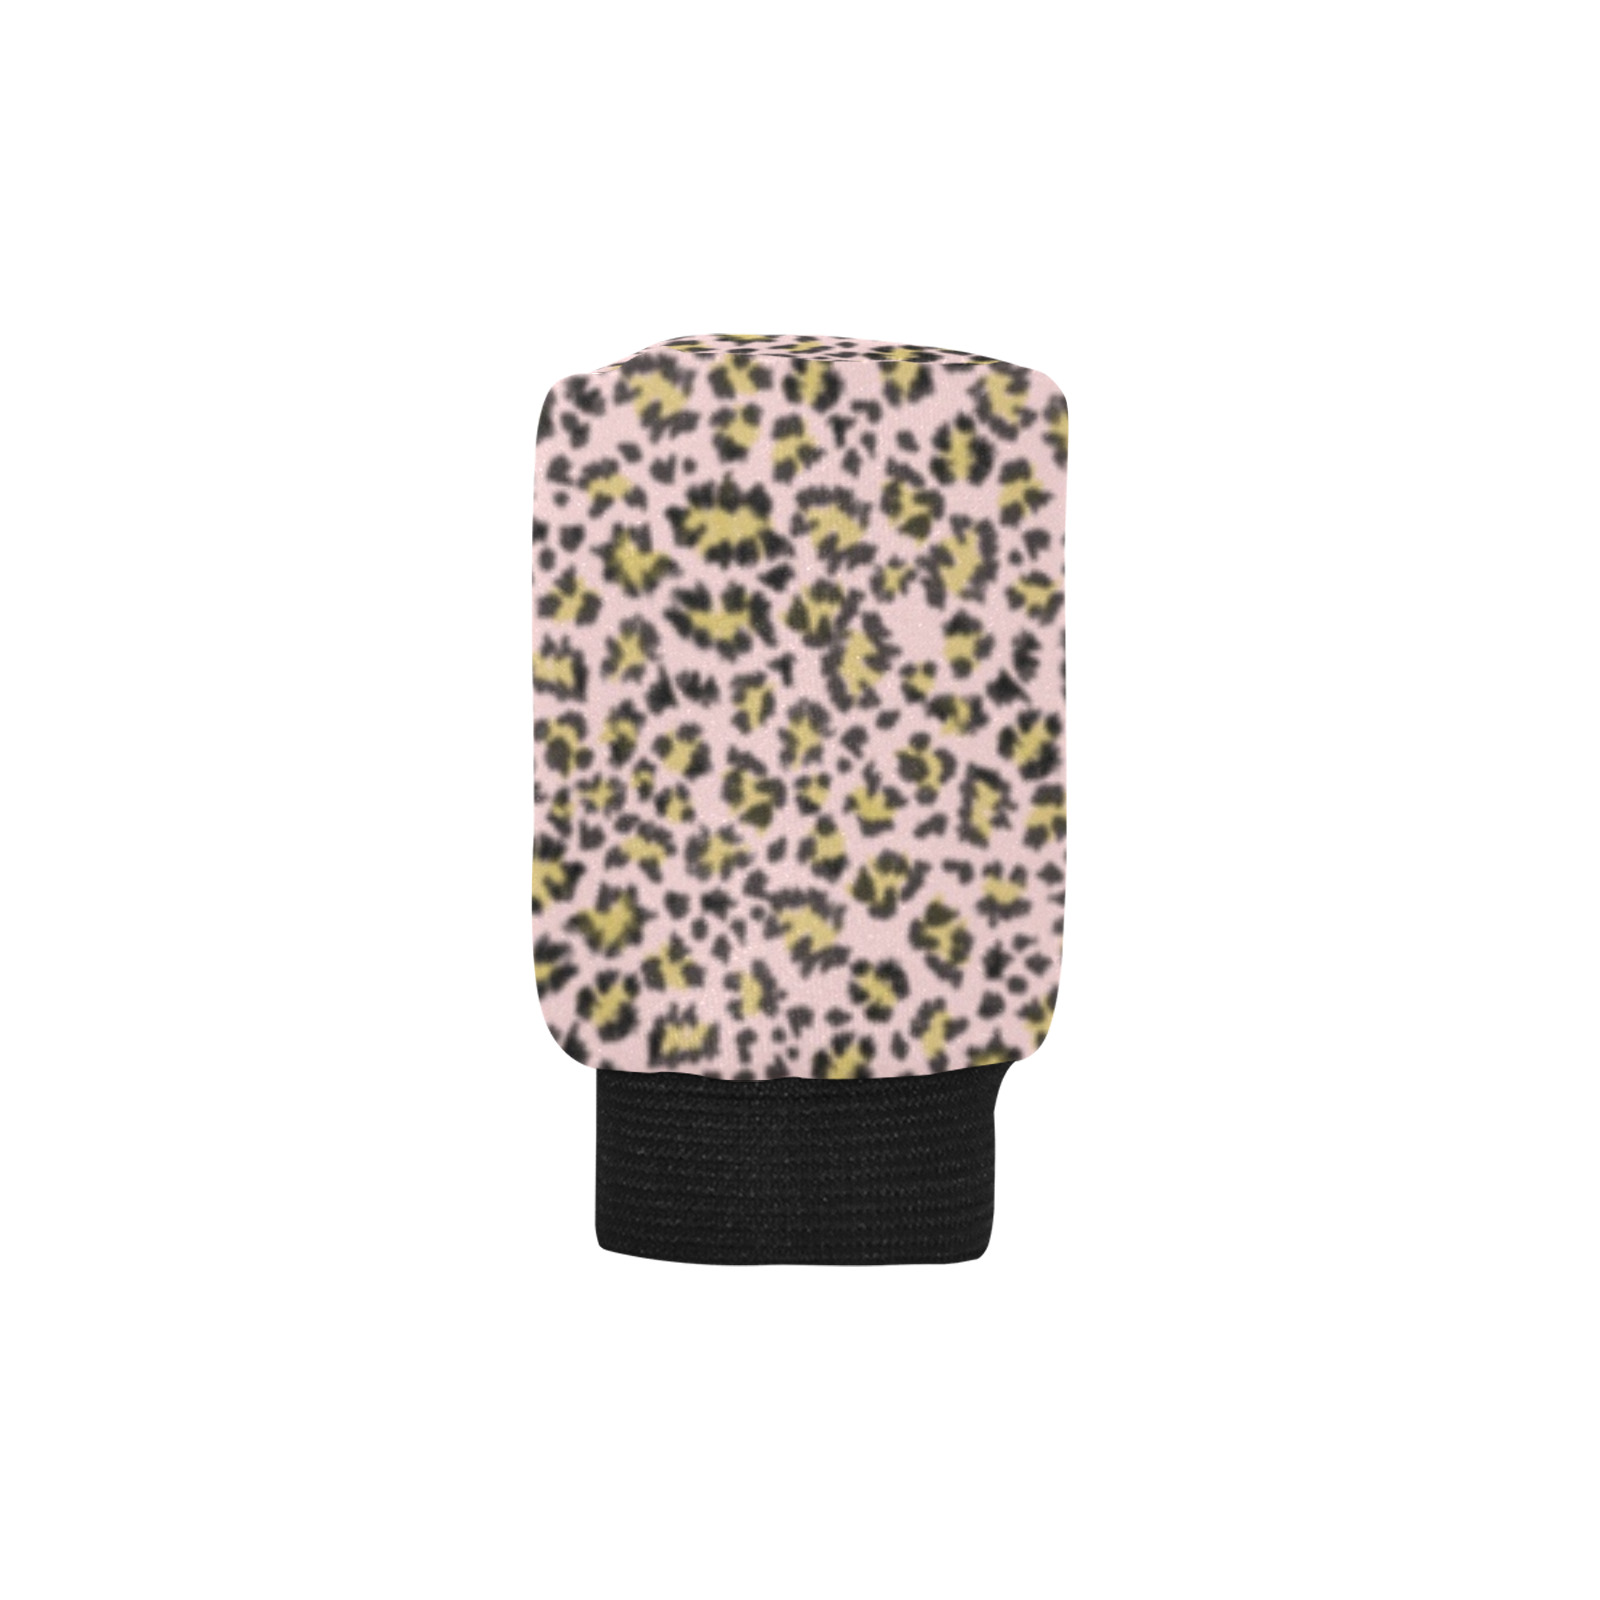 My pink leopard animal print dense50 Car Shift Knob Cover & Hand Brake Cover